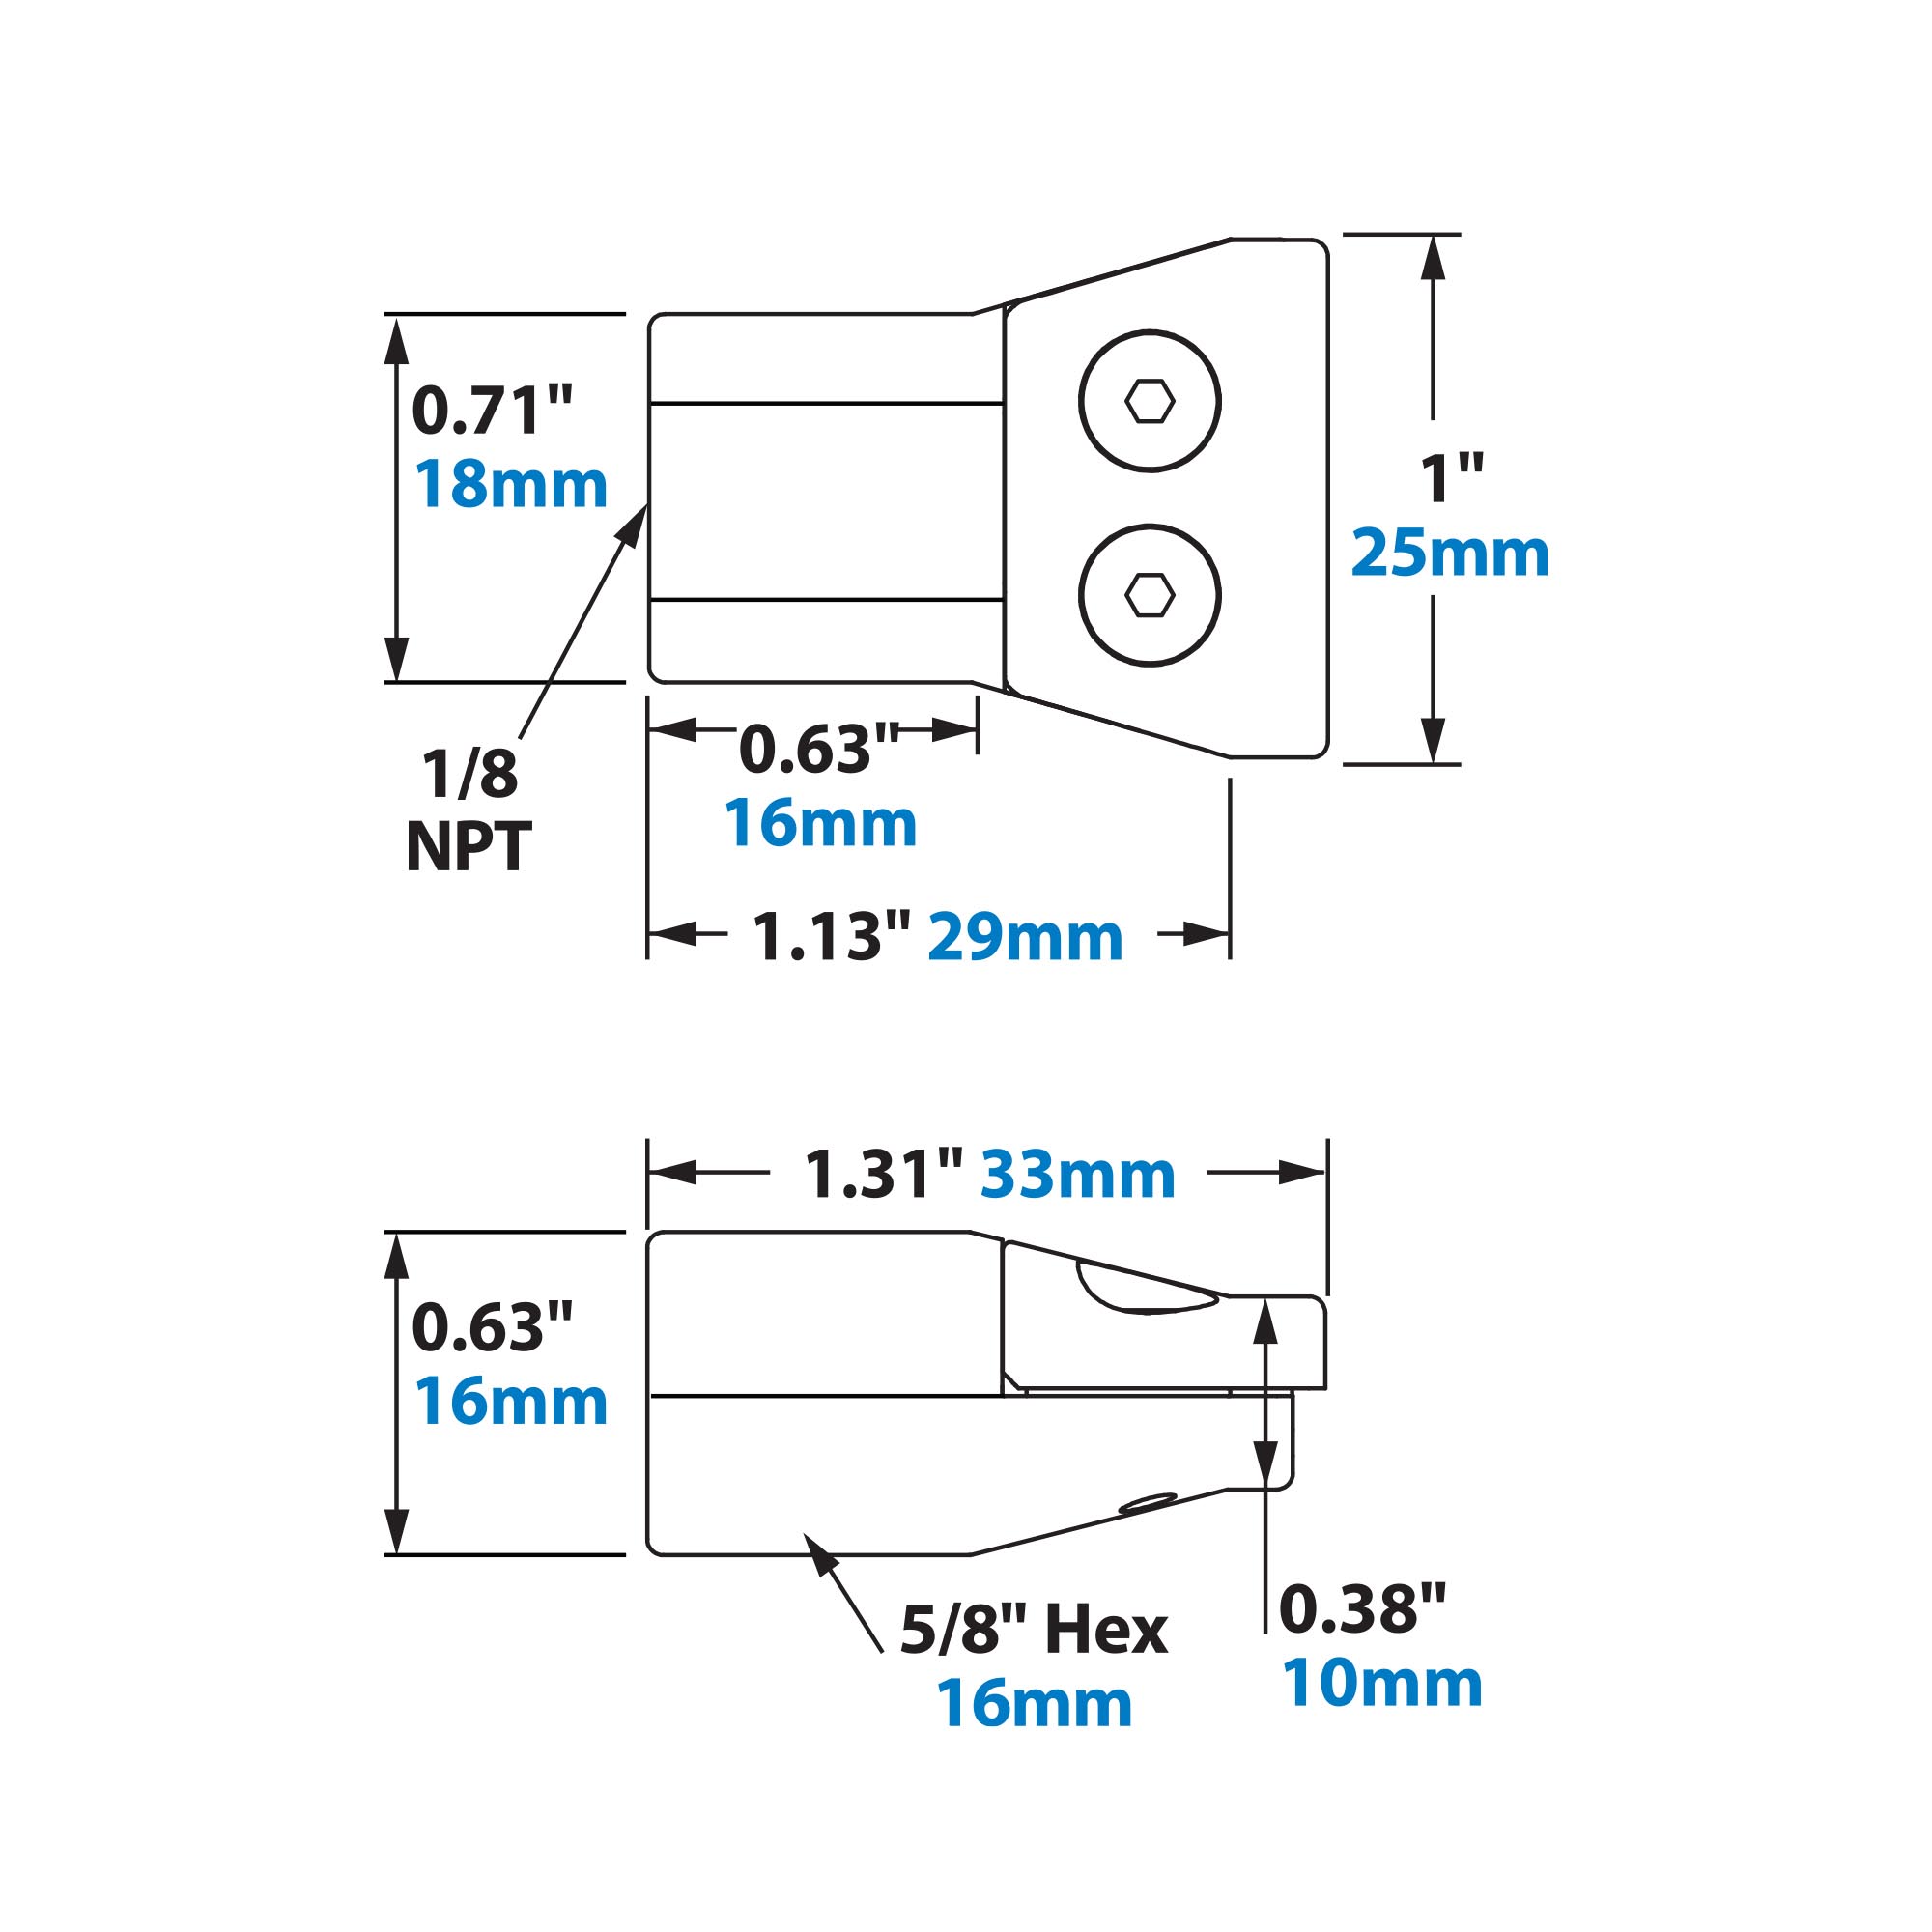 EXAIR 1 Inch Flat Super Air Nozzle Dimensions